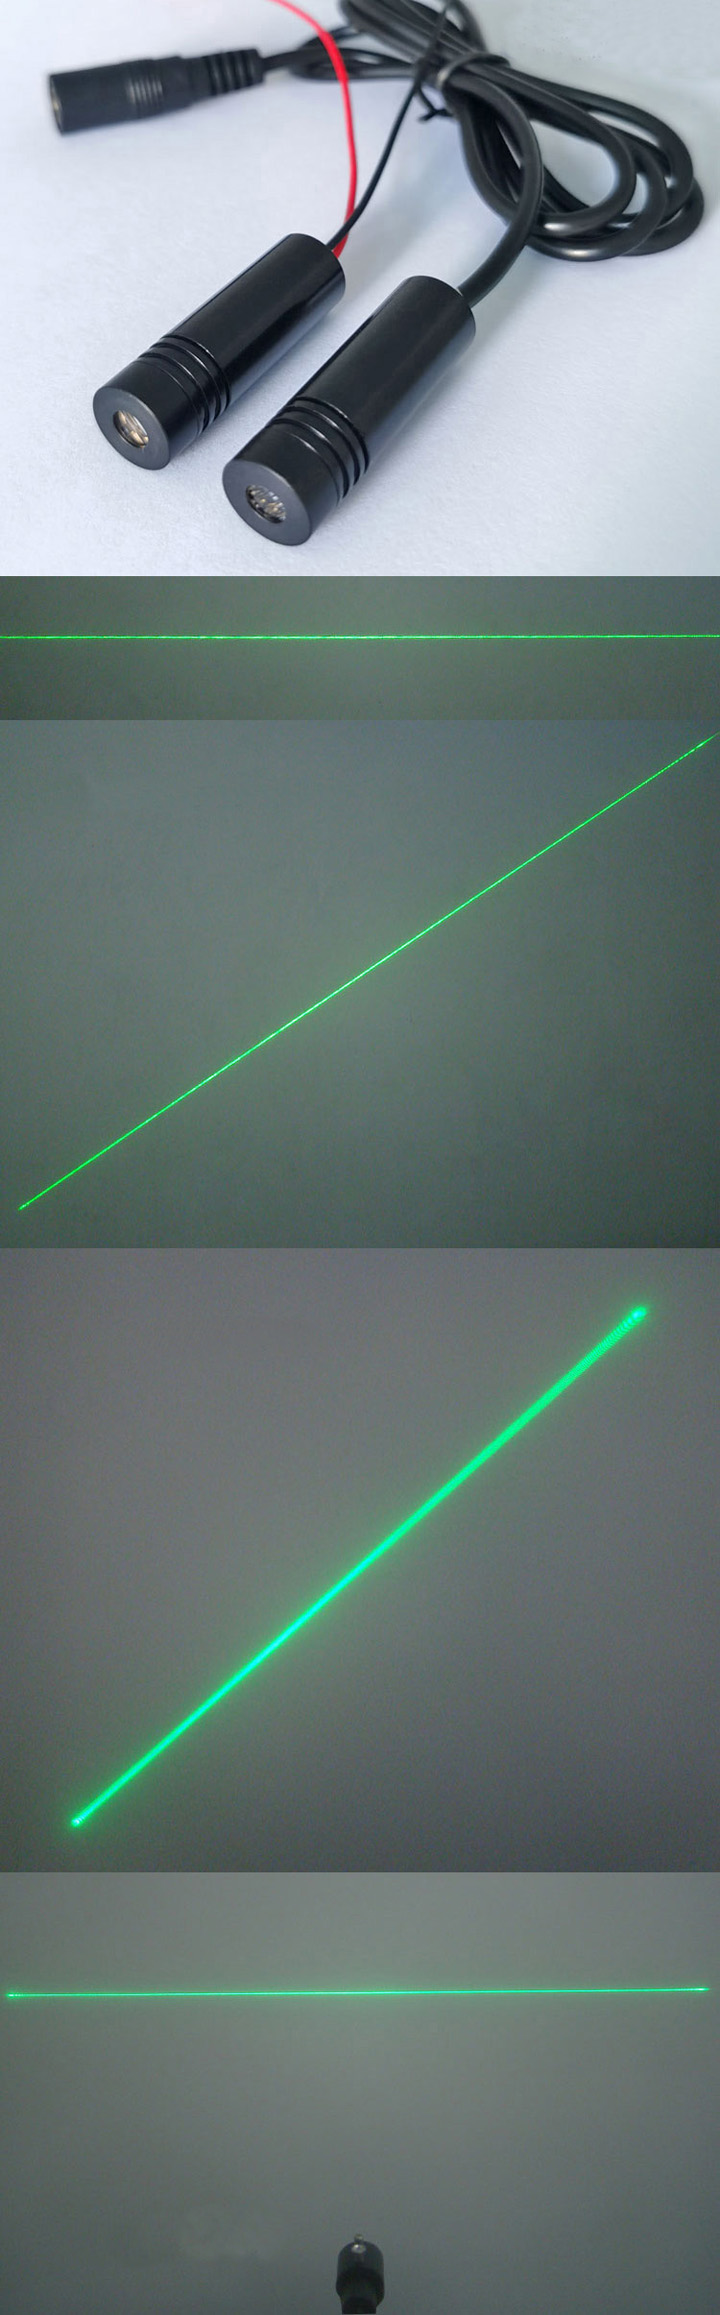 module laser vert ligne